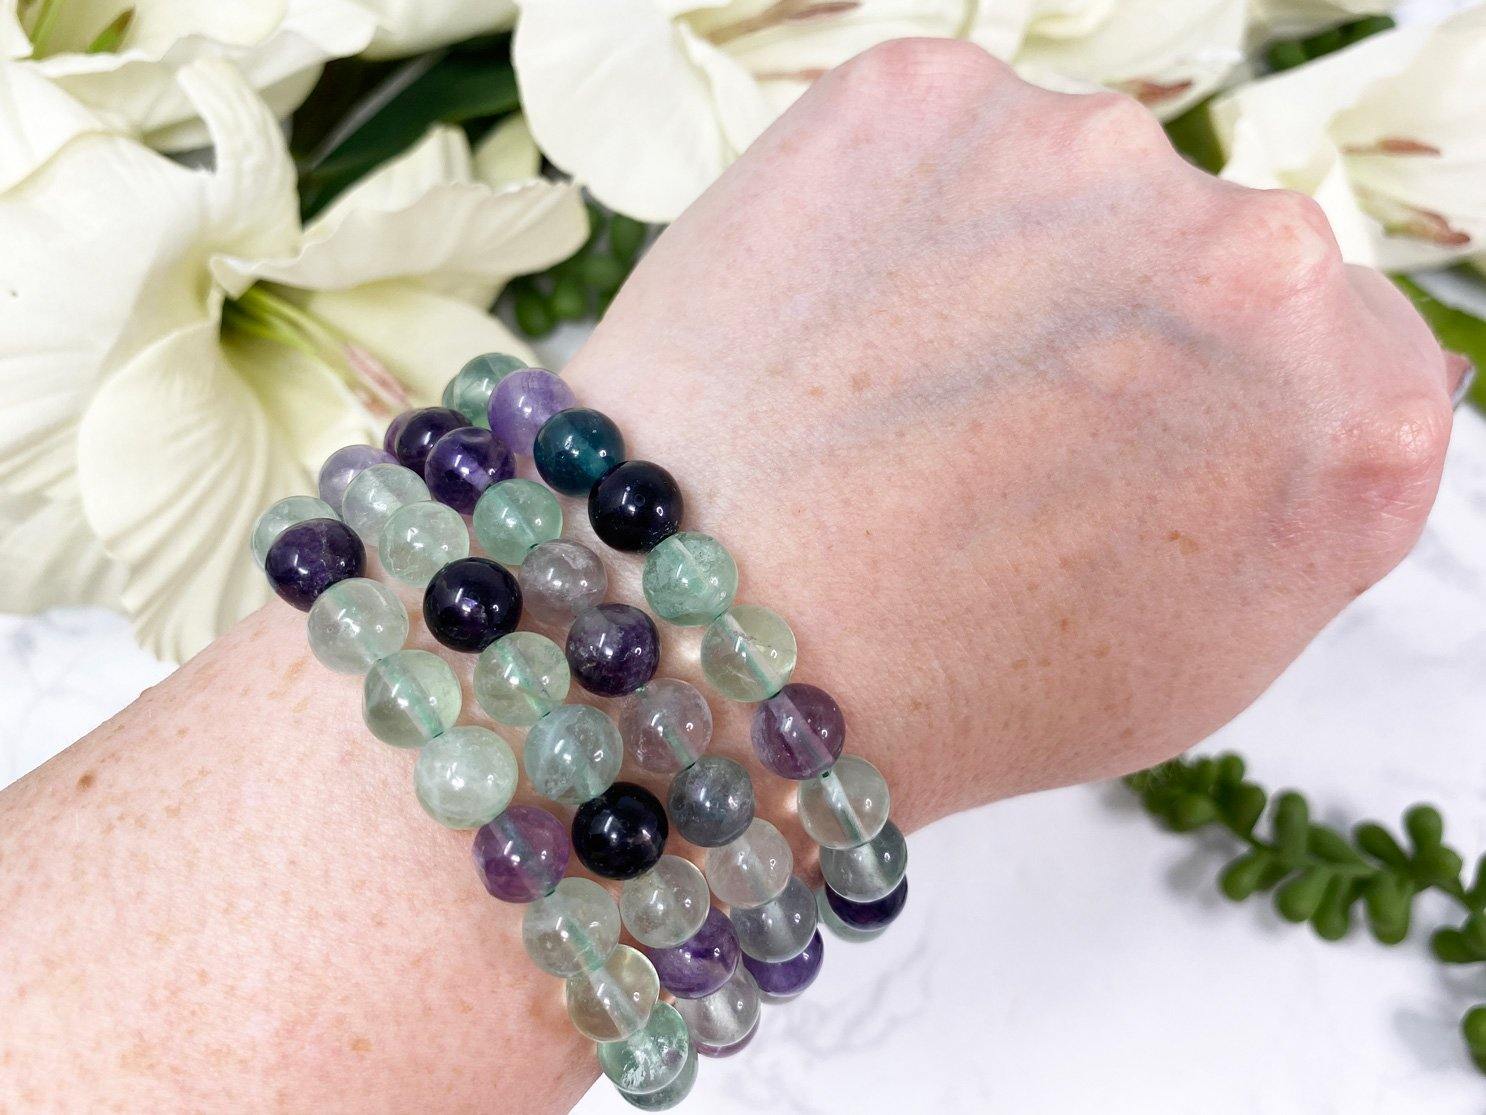 Natural Colorful Fluorite Quartz Carved Beads Bracelet 10x10mm